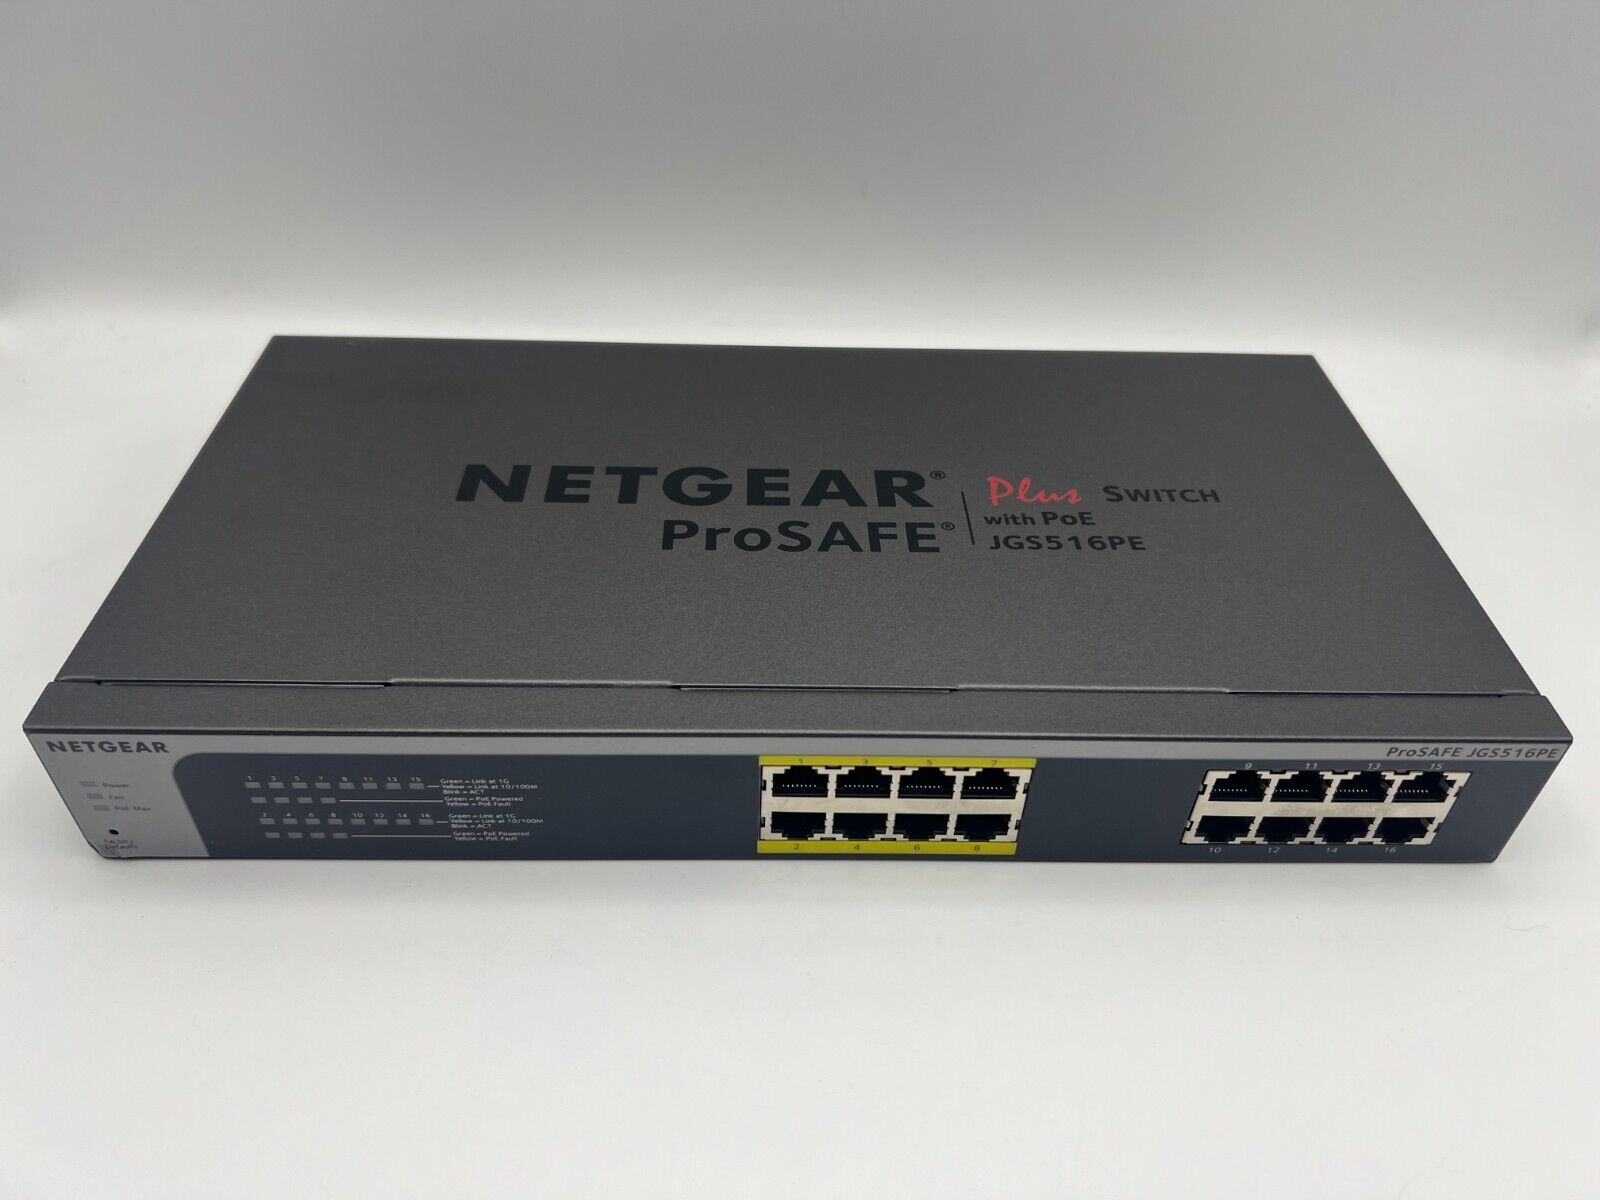 NETGEAR JGS516PE ProSafe Plus 16-Port Gigabit Ethernet Switch